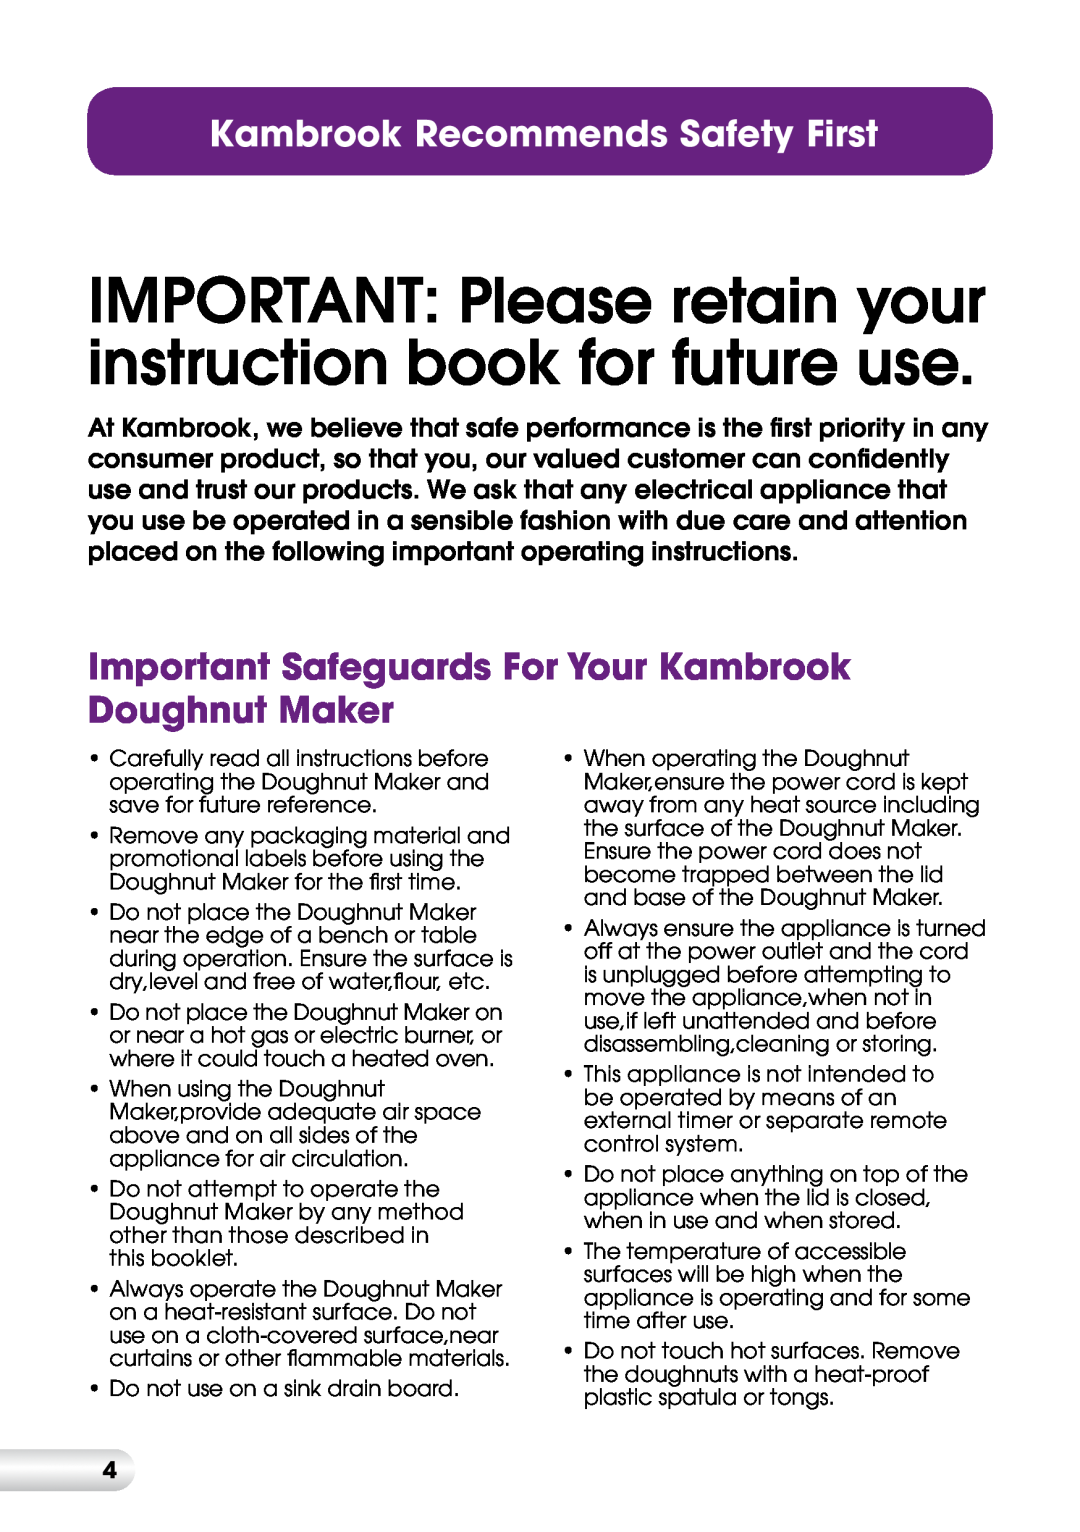 Kambrook KDM1 manual Important Safeguards For Your Kambrook Doughnut Maker, Kambrook Recommends Safety First 